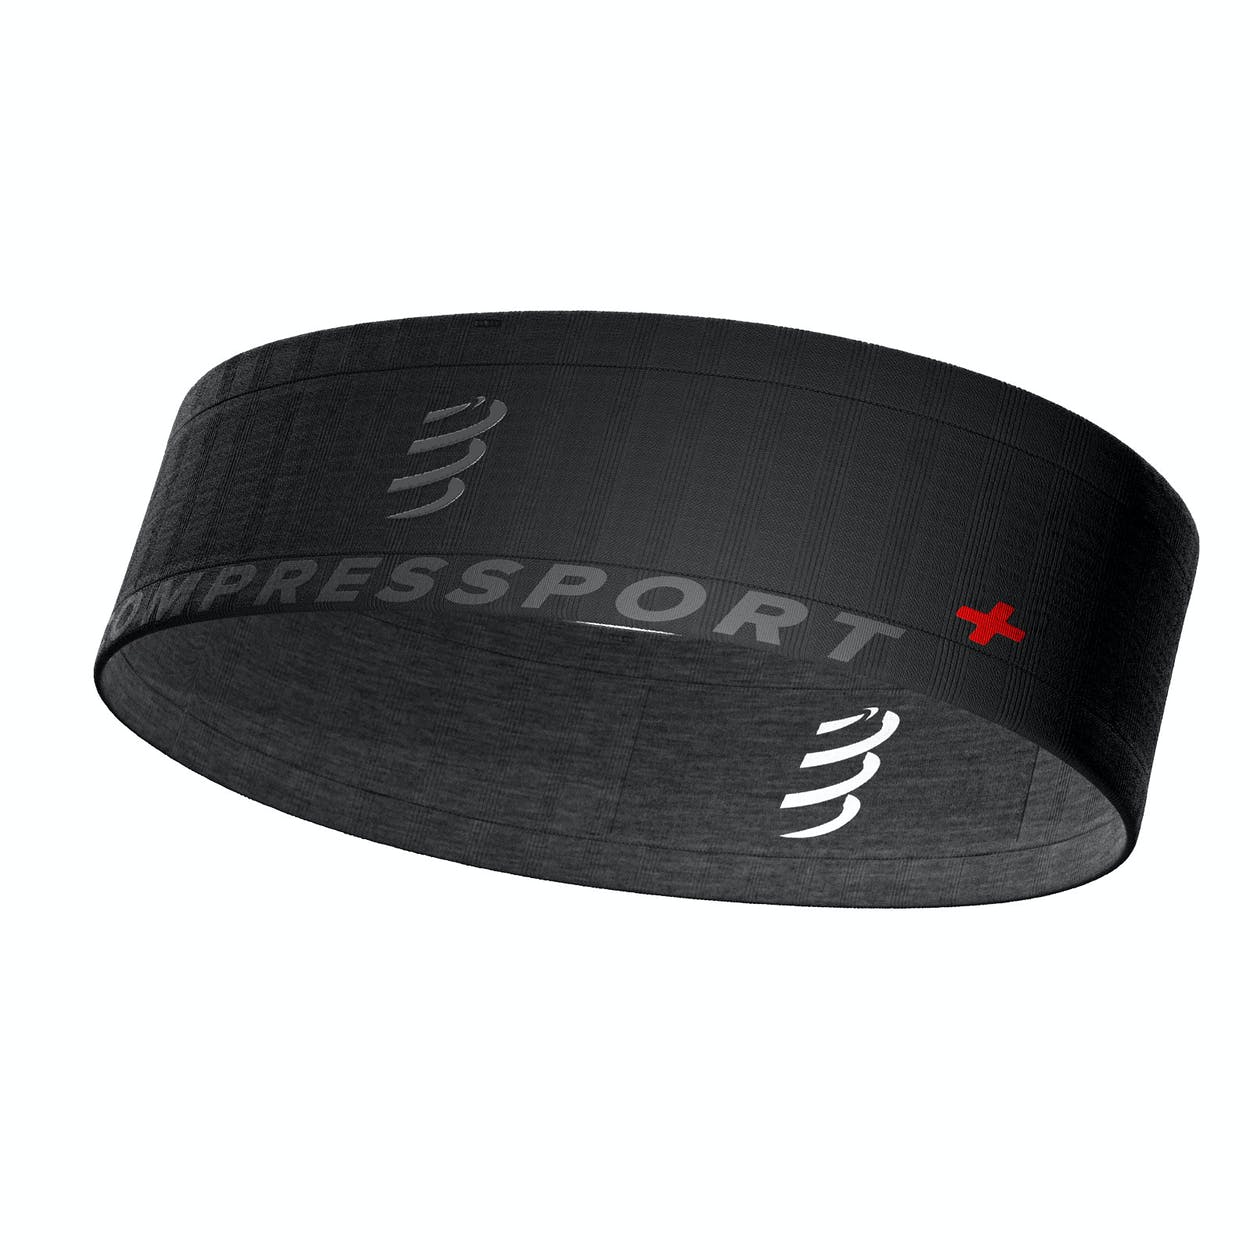 Compressport - Cinturón Reflectante Free Belt Flash